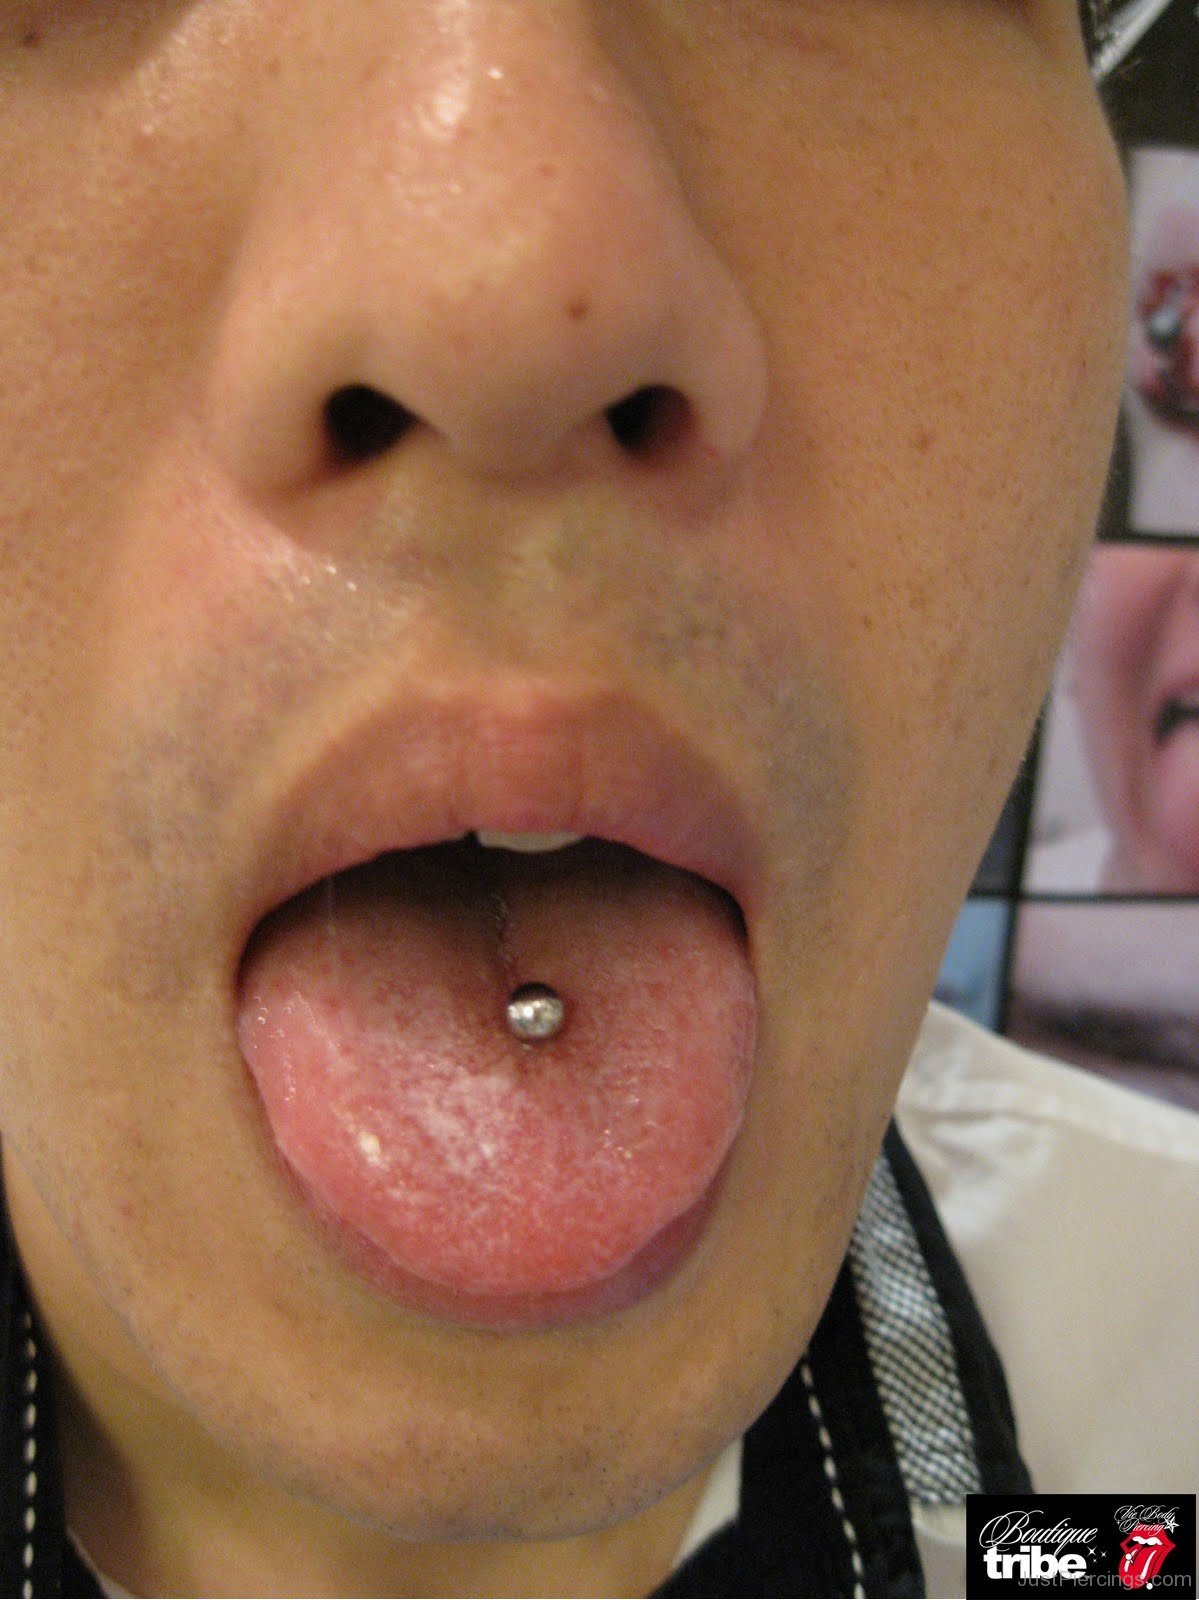 Why do guys get their tongue pierced